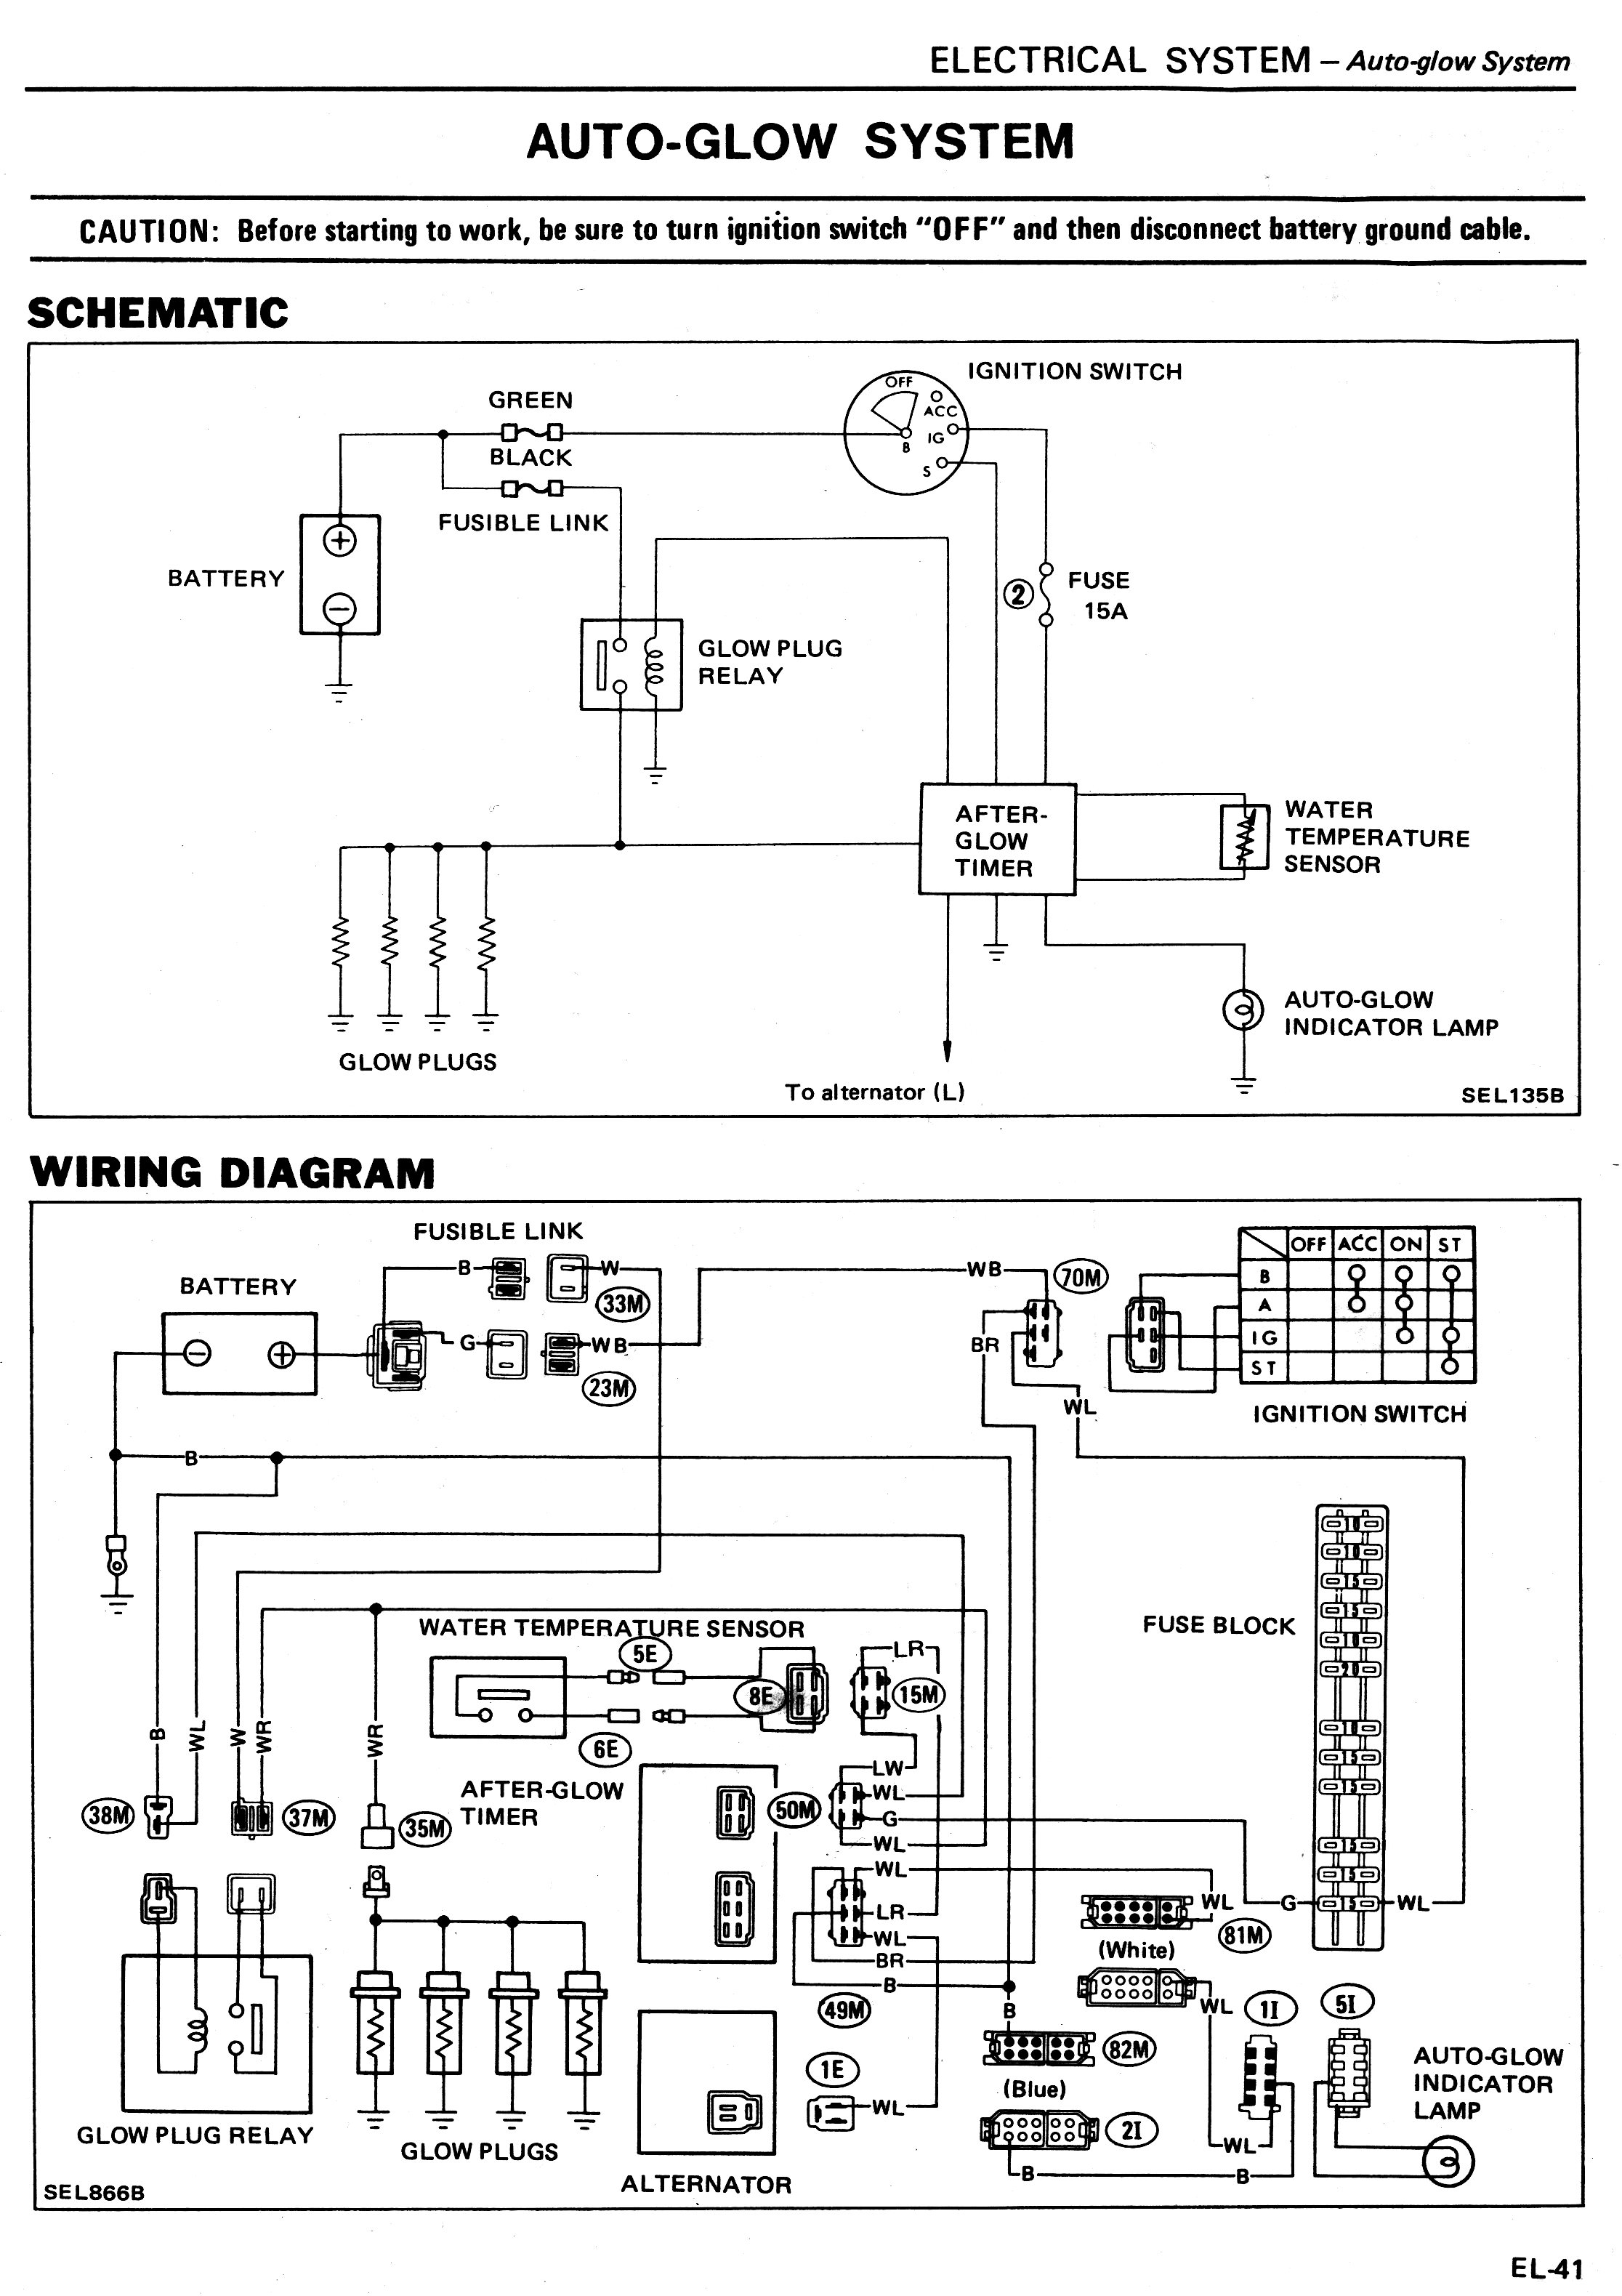 1982 Datsun 720 FSM, EL41 GP system schematic